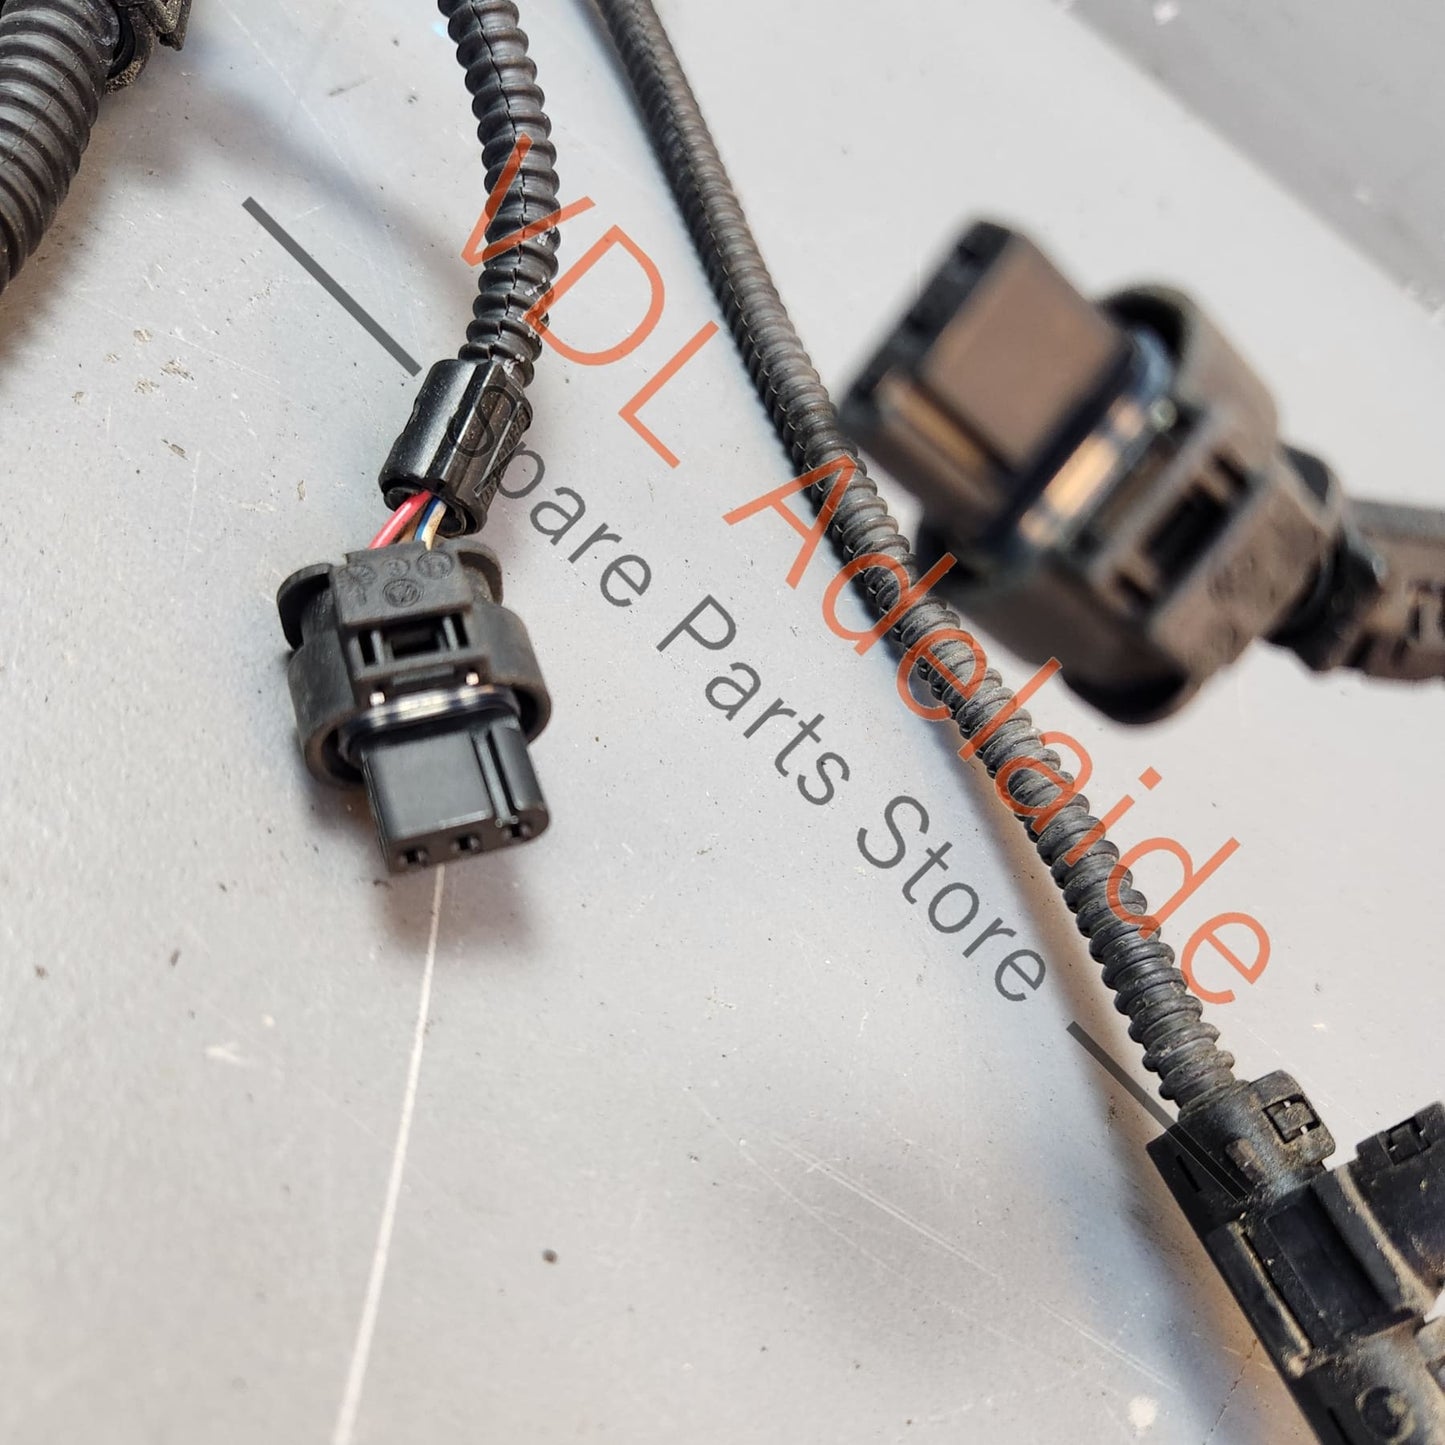 7L5971104E    Porsche Cayenne 9PA Rear bumper wiring harness for PDC Parking sensors 7L5971104E